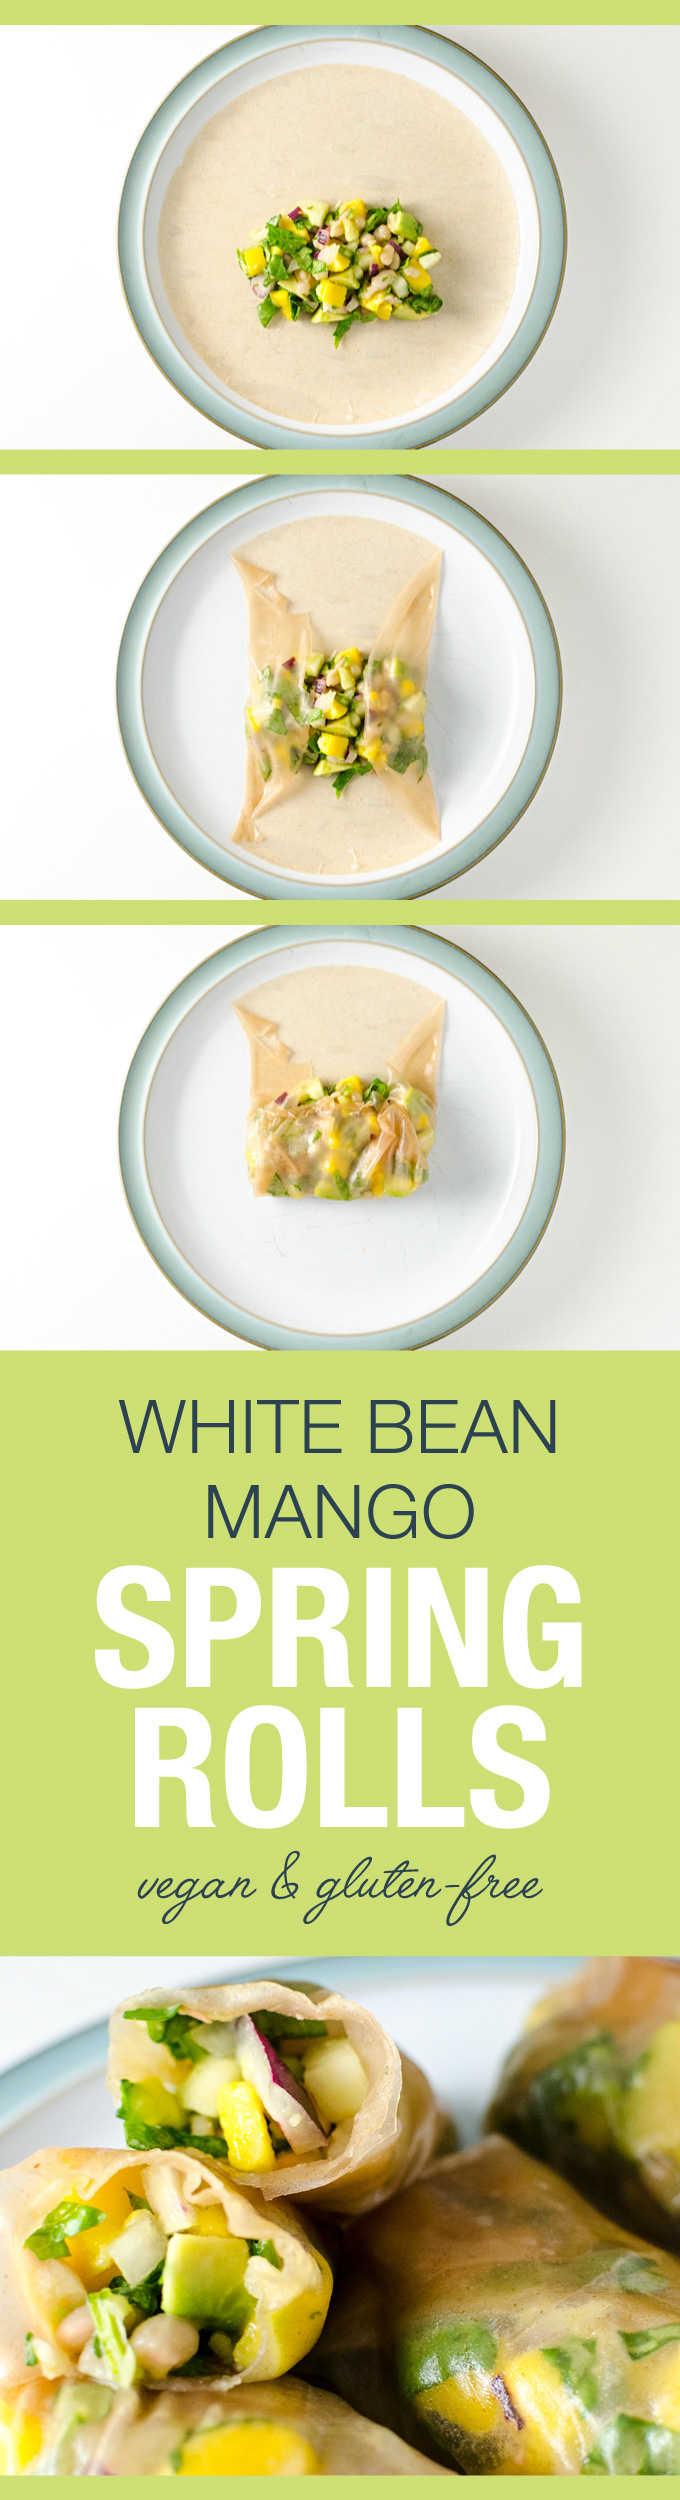 White-Bean-Mango-Spring-Rolls